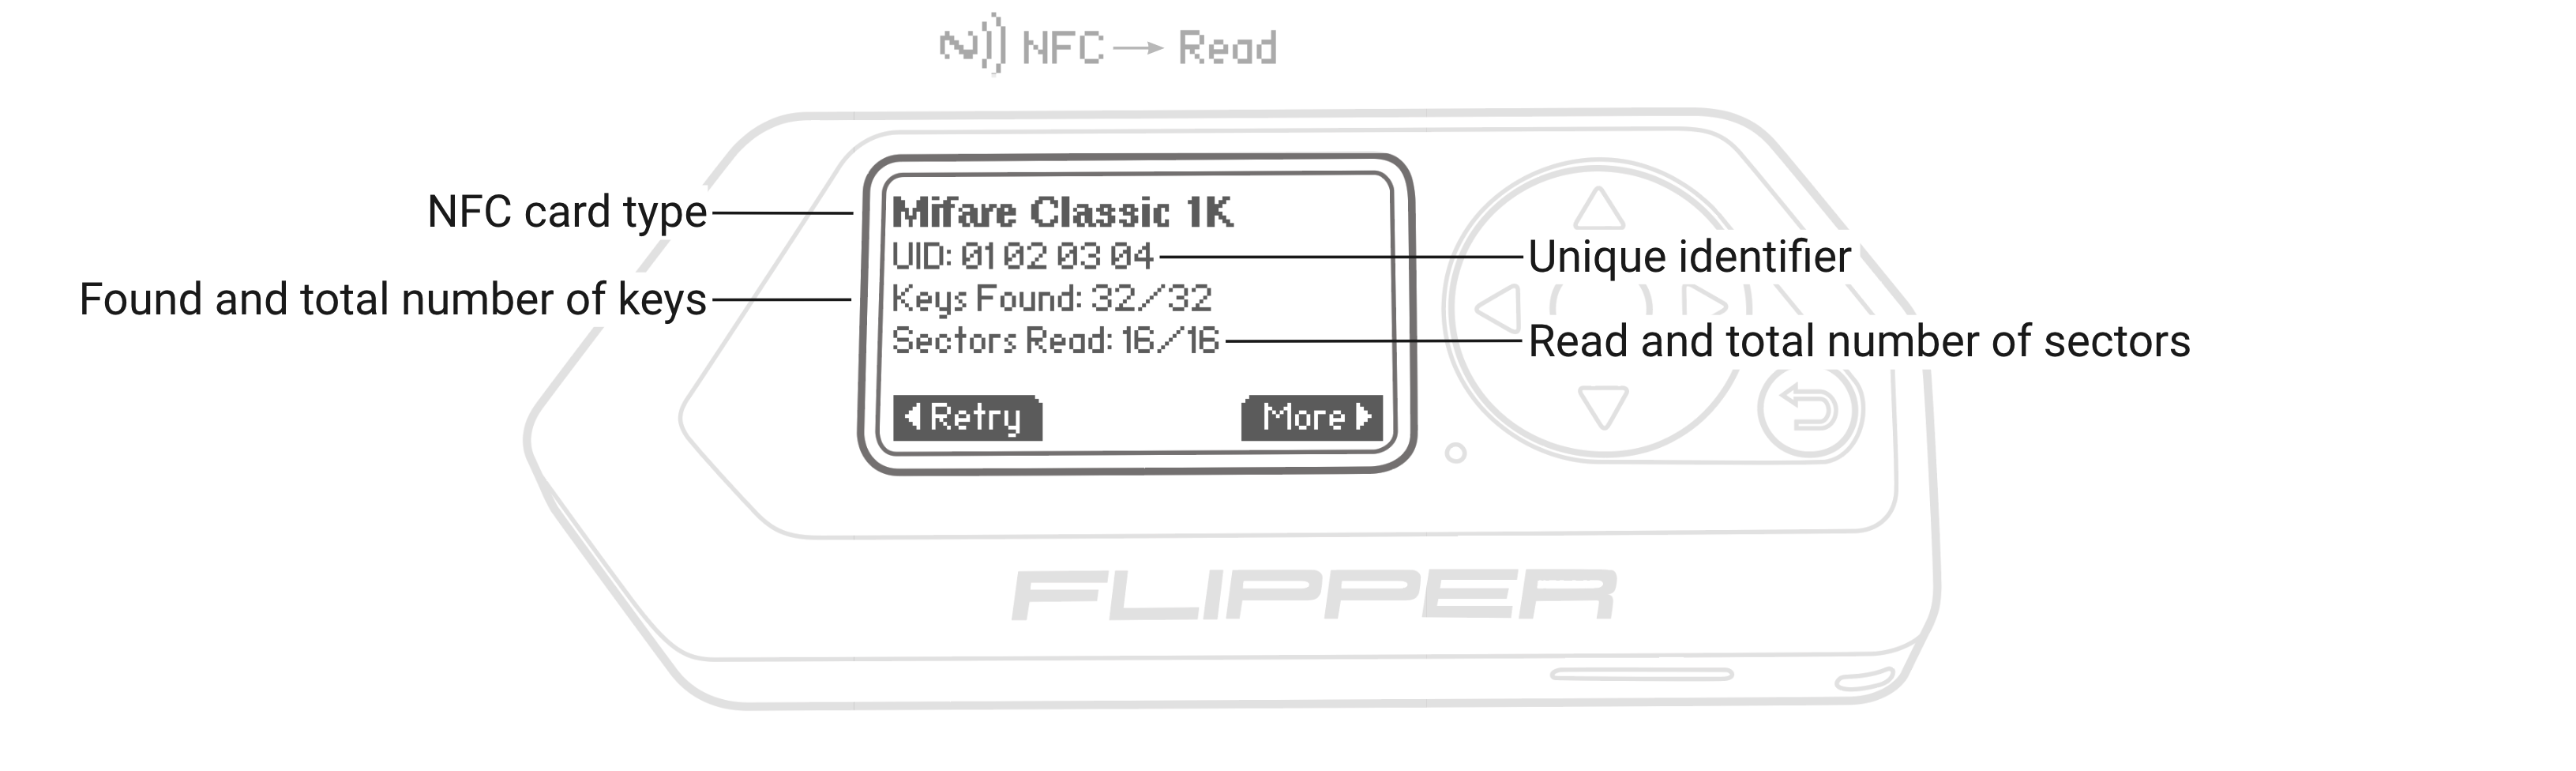 MIFARE Classic reading screen